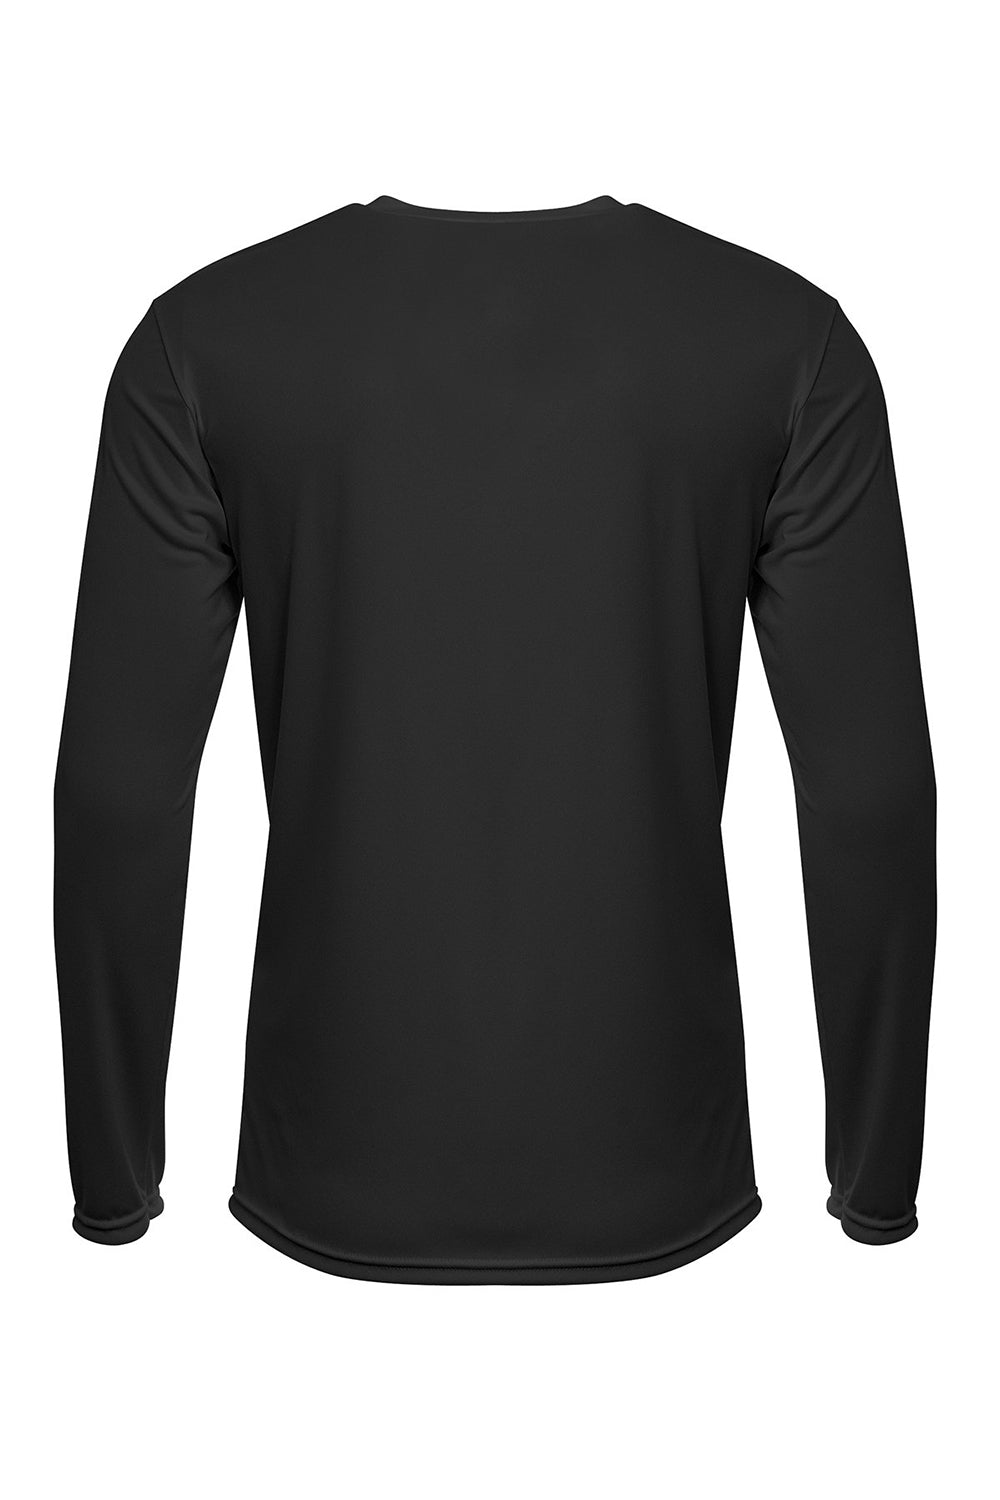 A4 N3425 Mens Sprint Moisture Wicking Long Sleeve Crewneck T-Shirt Black Flat Back